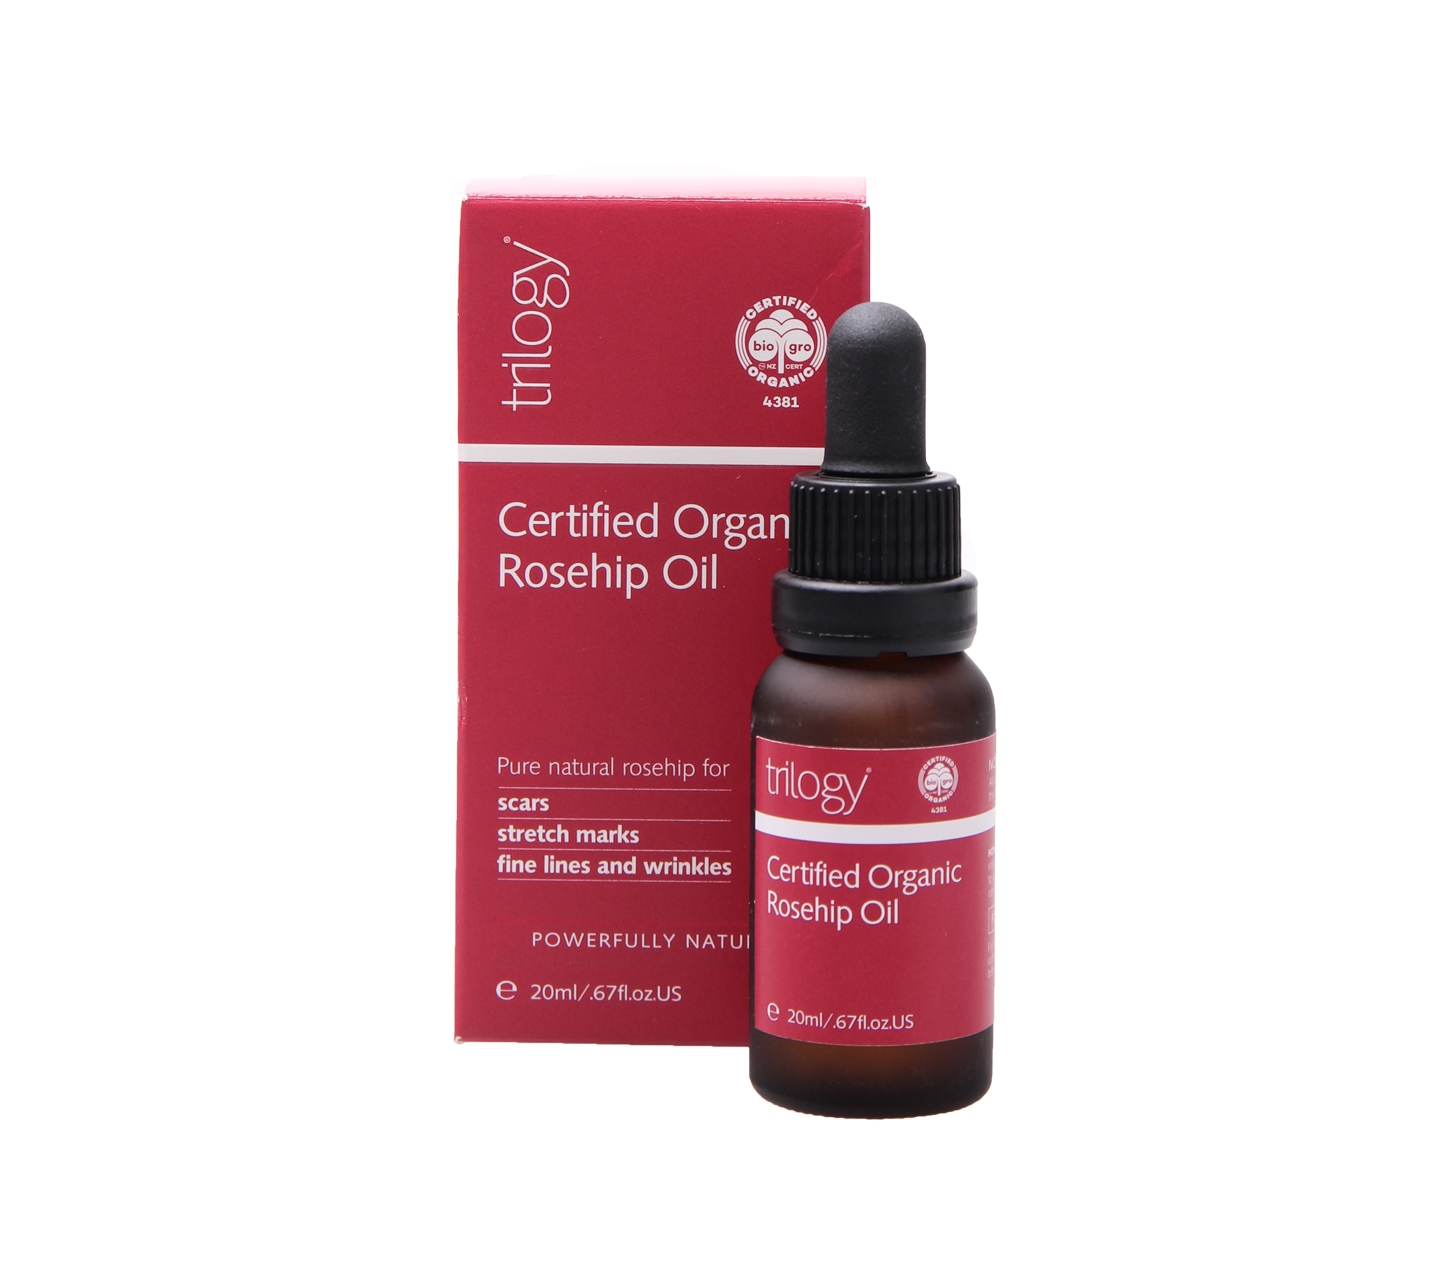 Trilogy Certified Organic Rosehio Oil Skin Care